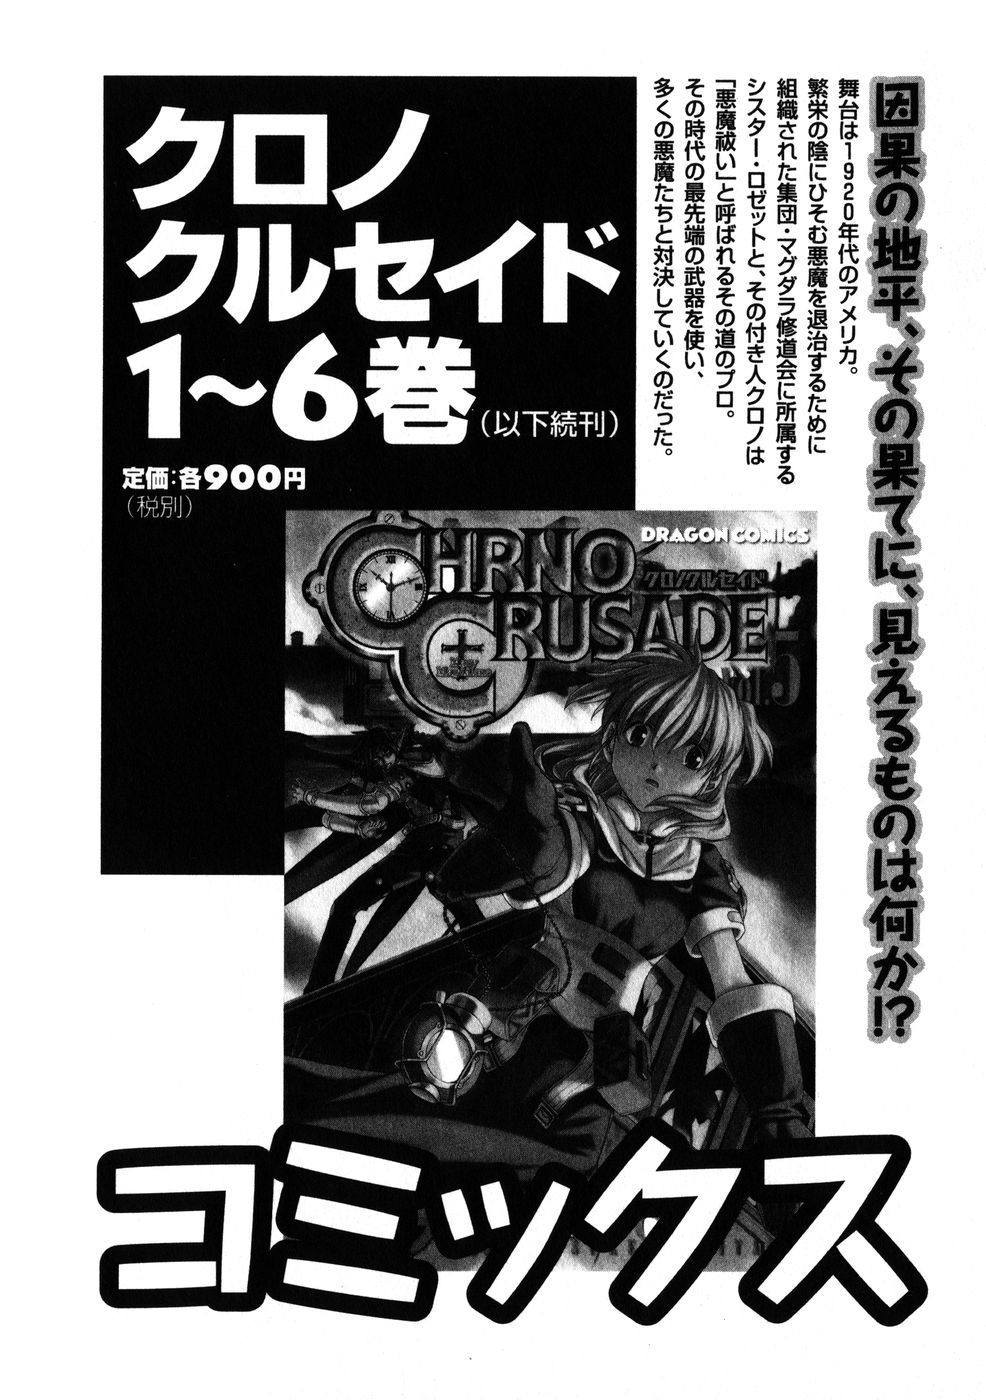 [Manga] Chrono Crusade (Đọc online tại SSF) CHRNO-CRUSADE-01-180